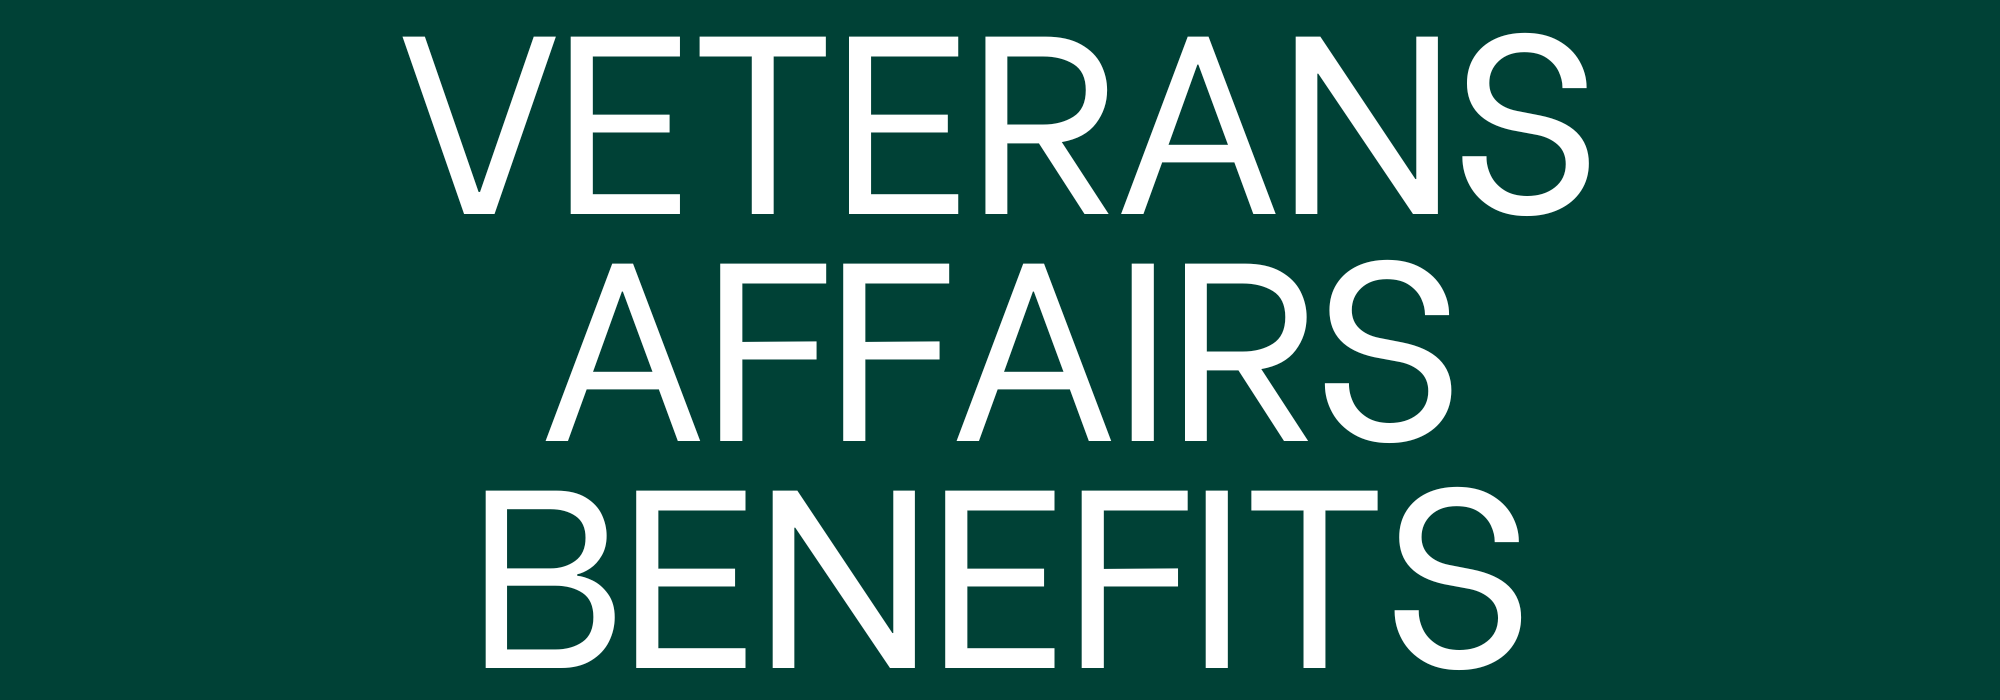 veterans affairs benefits web page